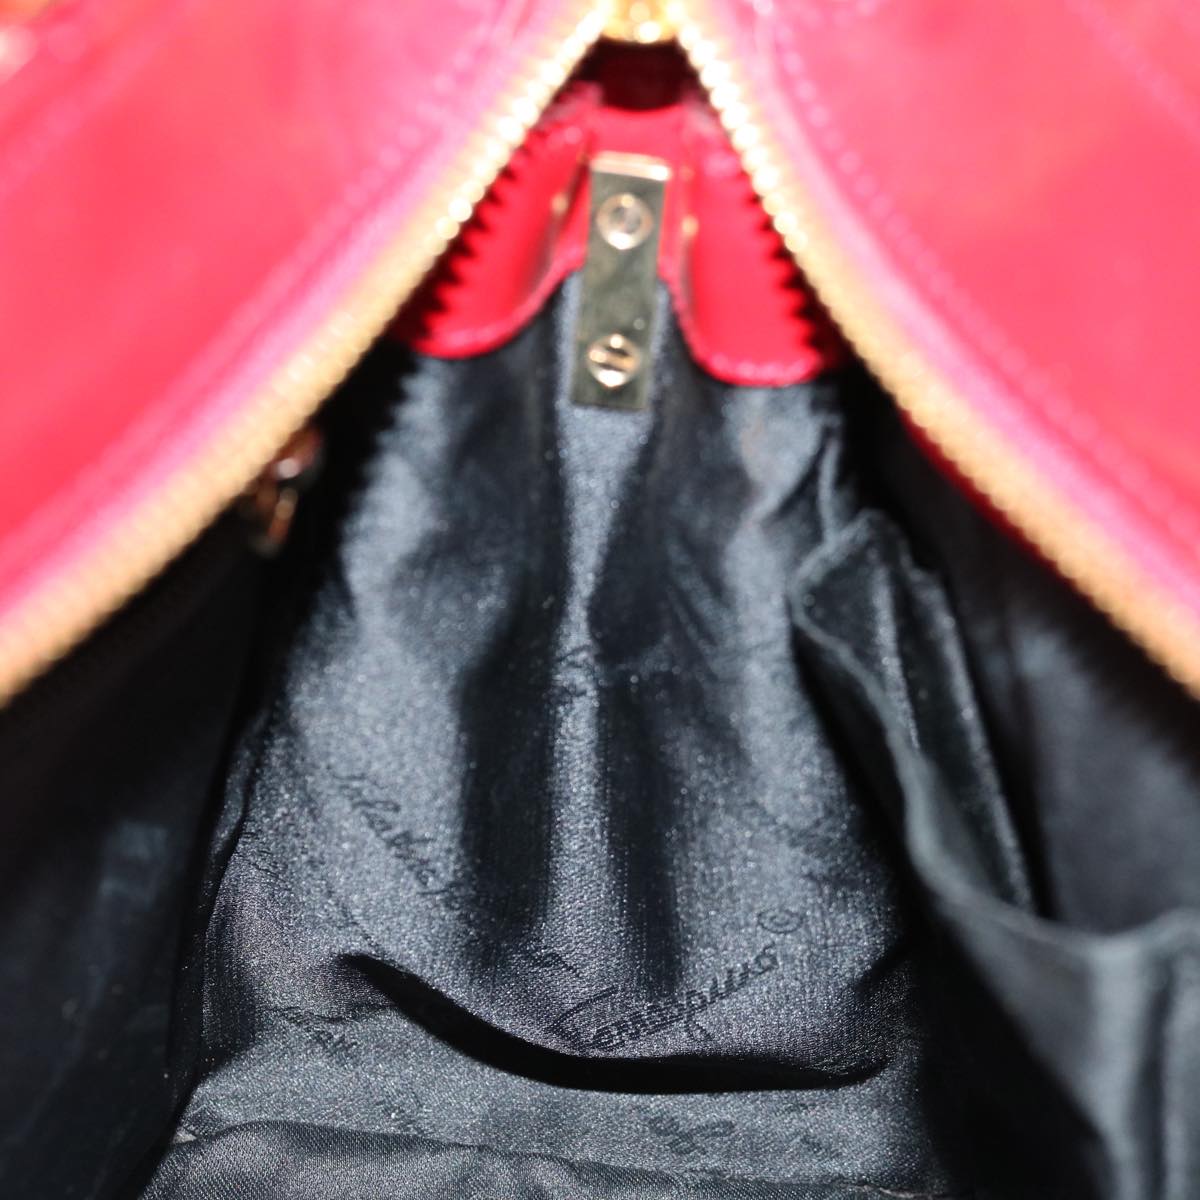 Salvatore Ferragamo Gancini Hand Bag Leather 2way Red Auth th4761